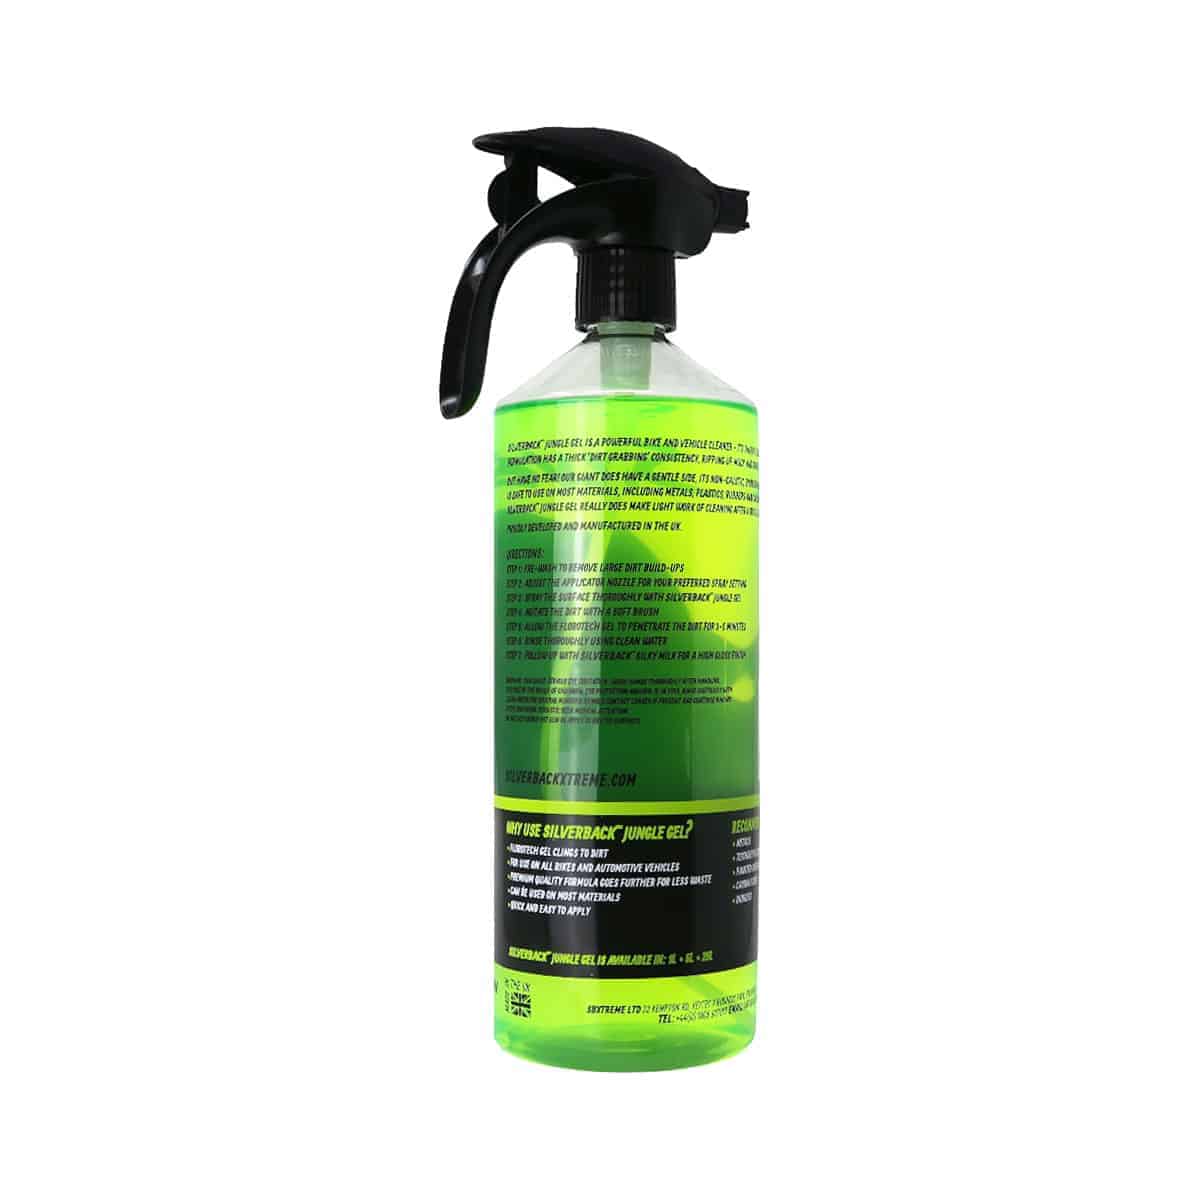 Silverback Jungle Gel pre-wash: Shift stubborn paintwork & plastics contamination with one spray instructions